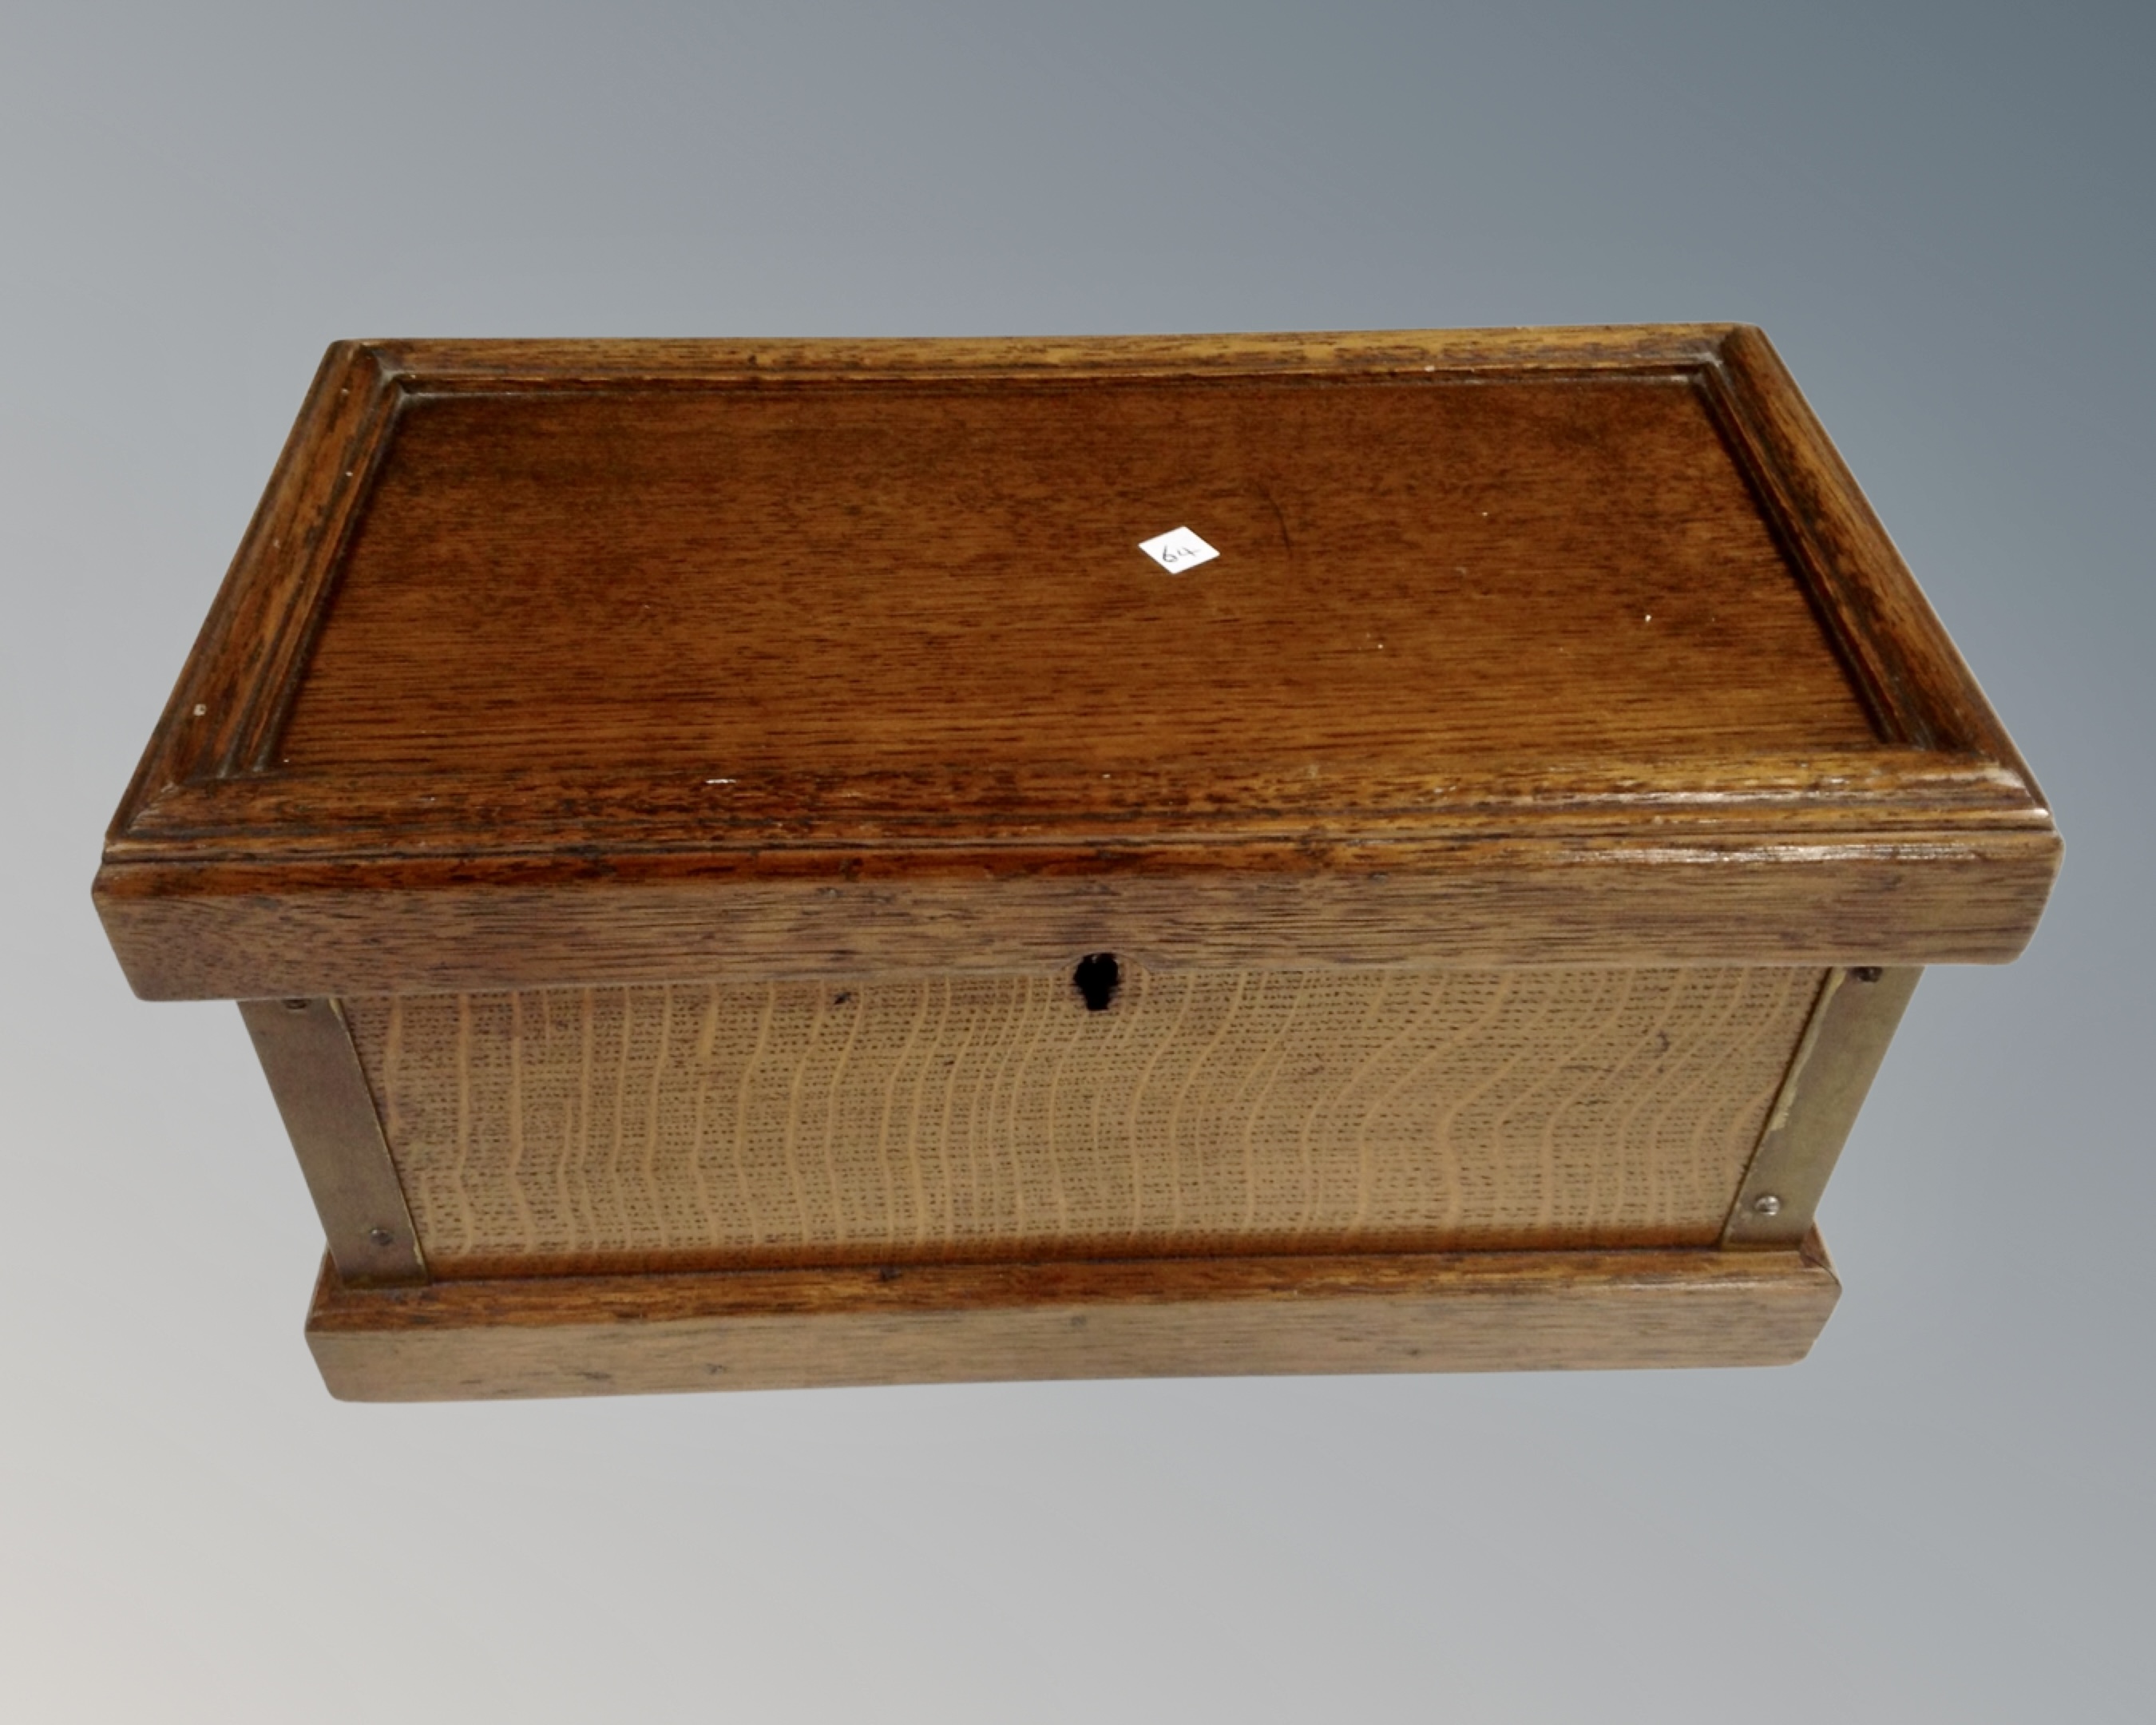 A 19th century oak table box